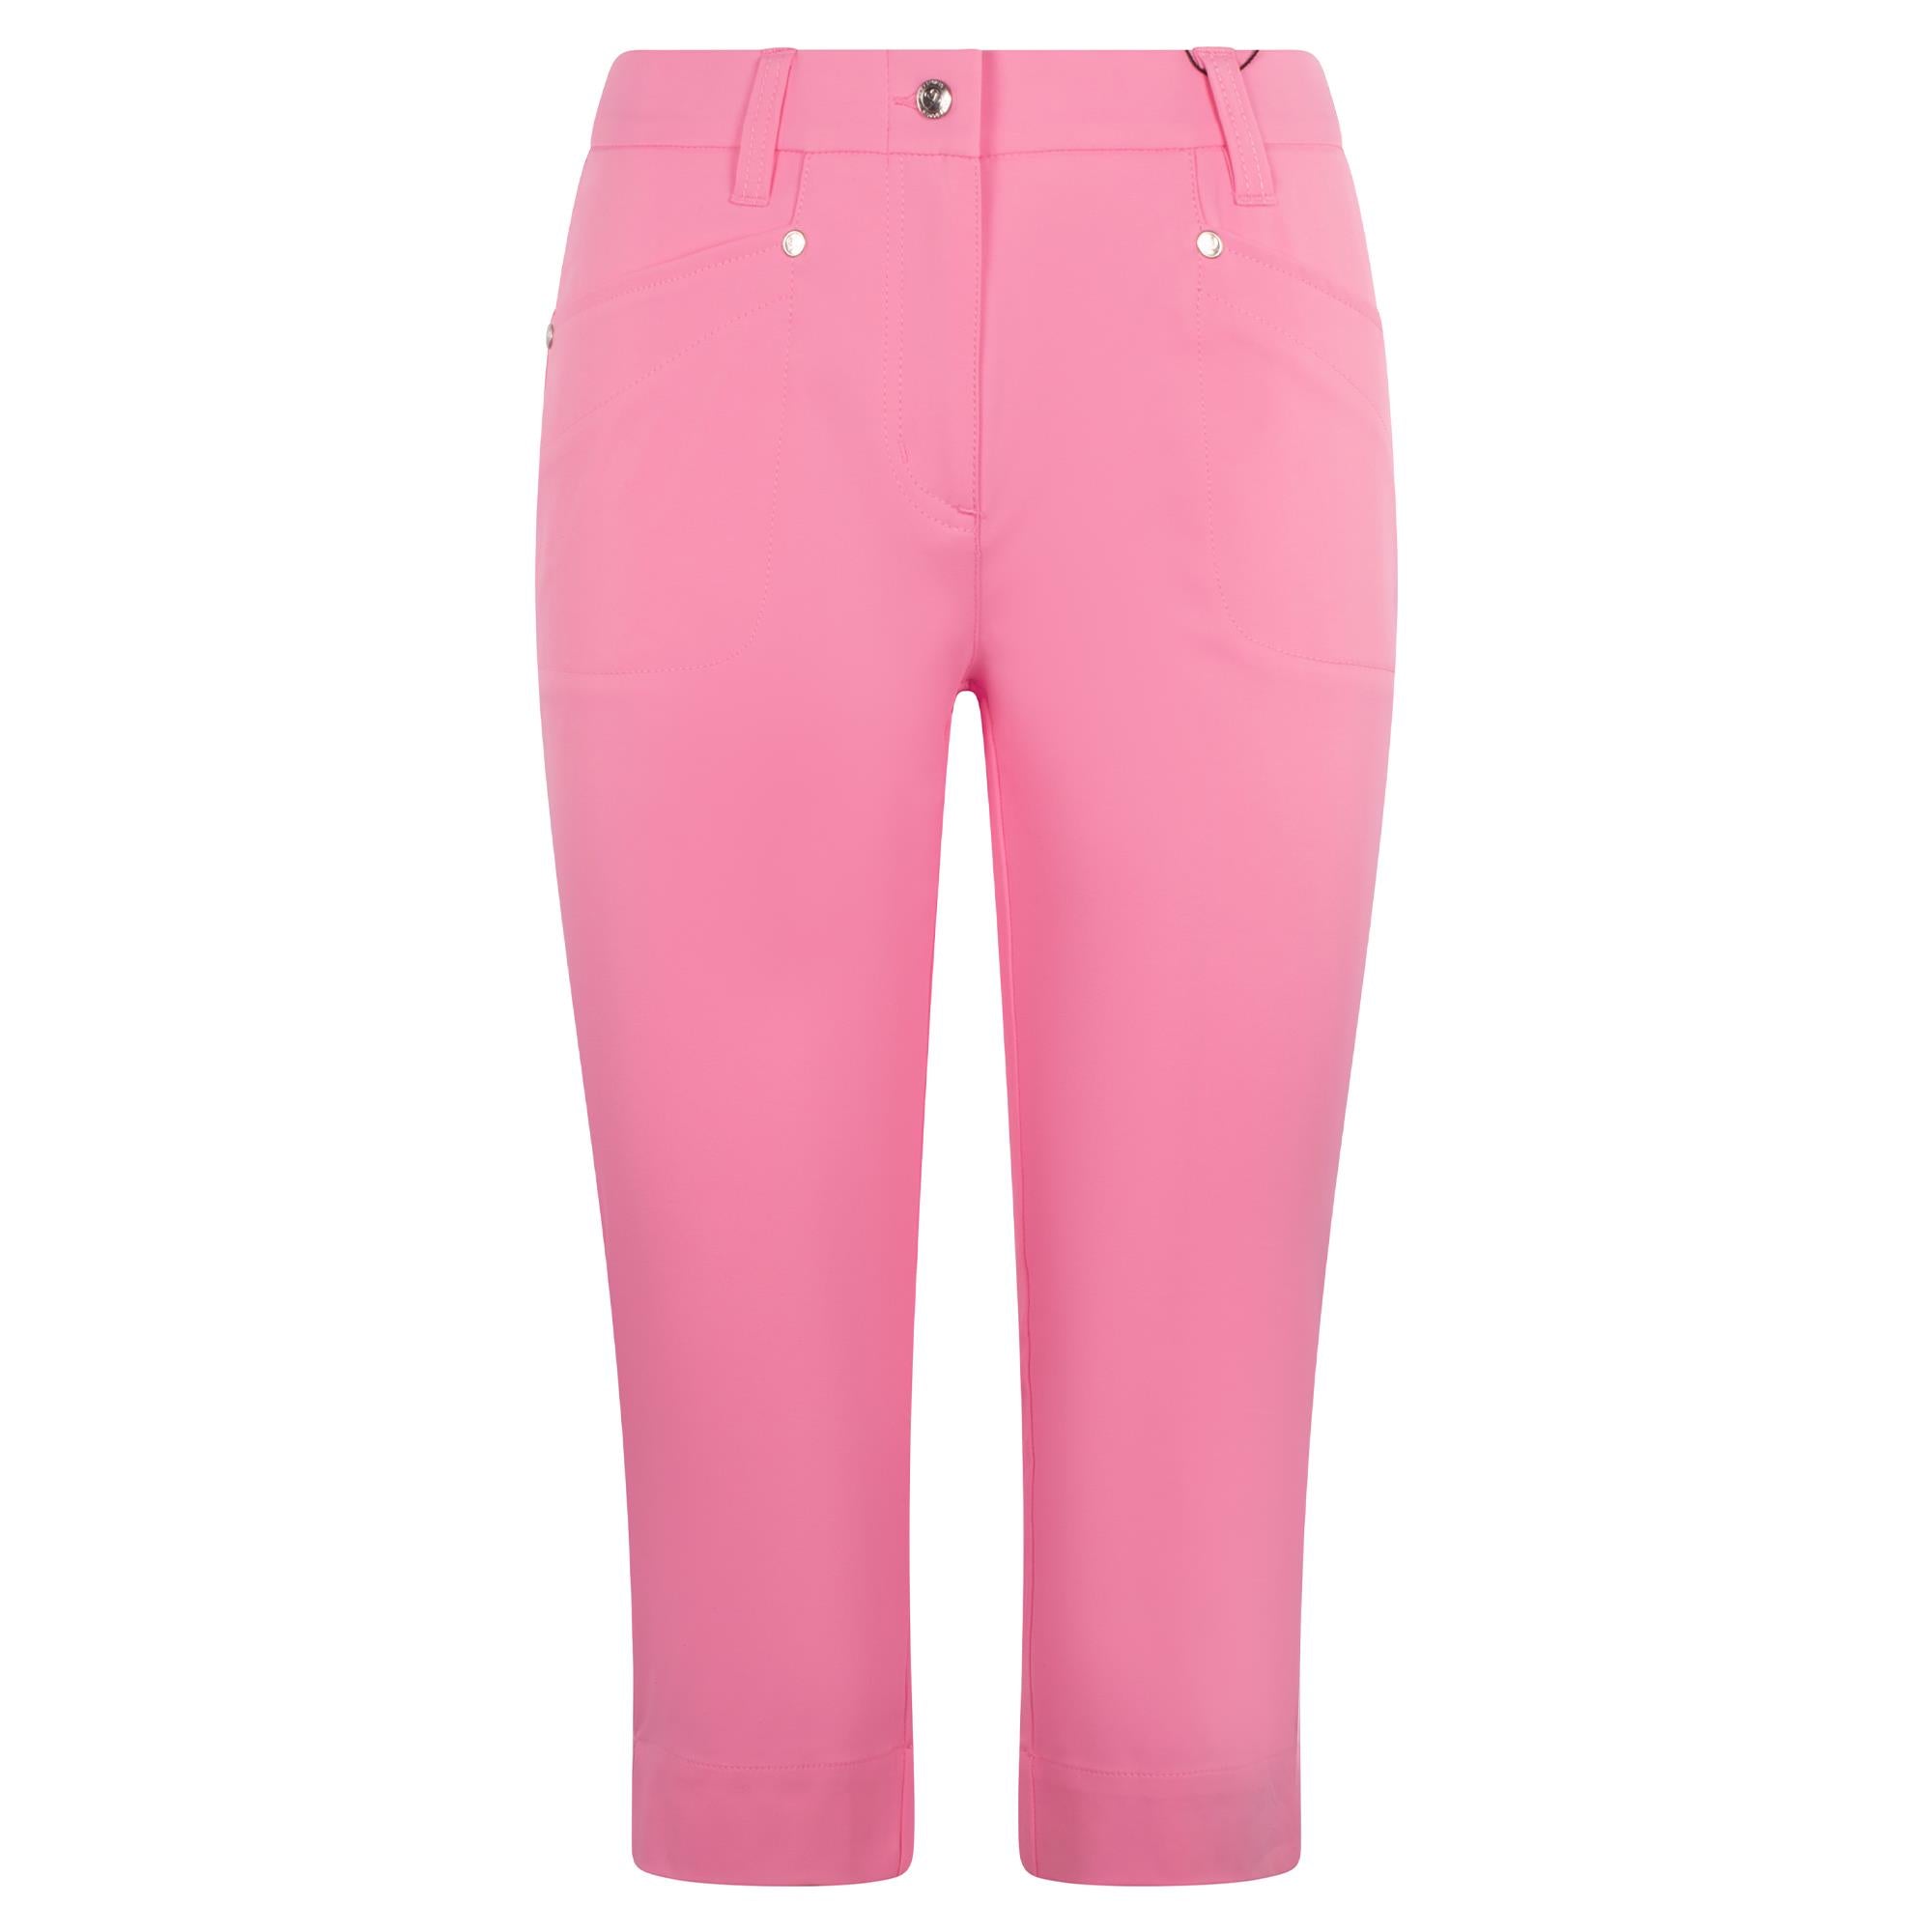 JRB Women's Golf Capri Trousers - French Pink